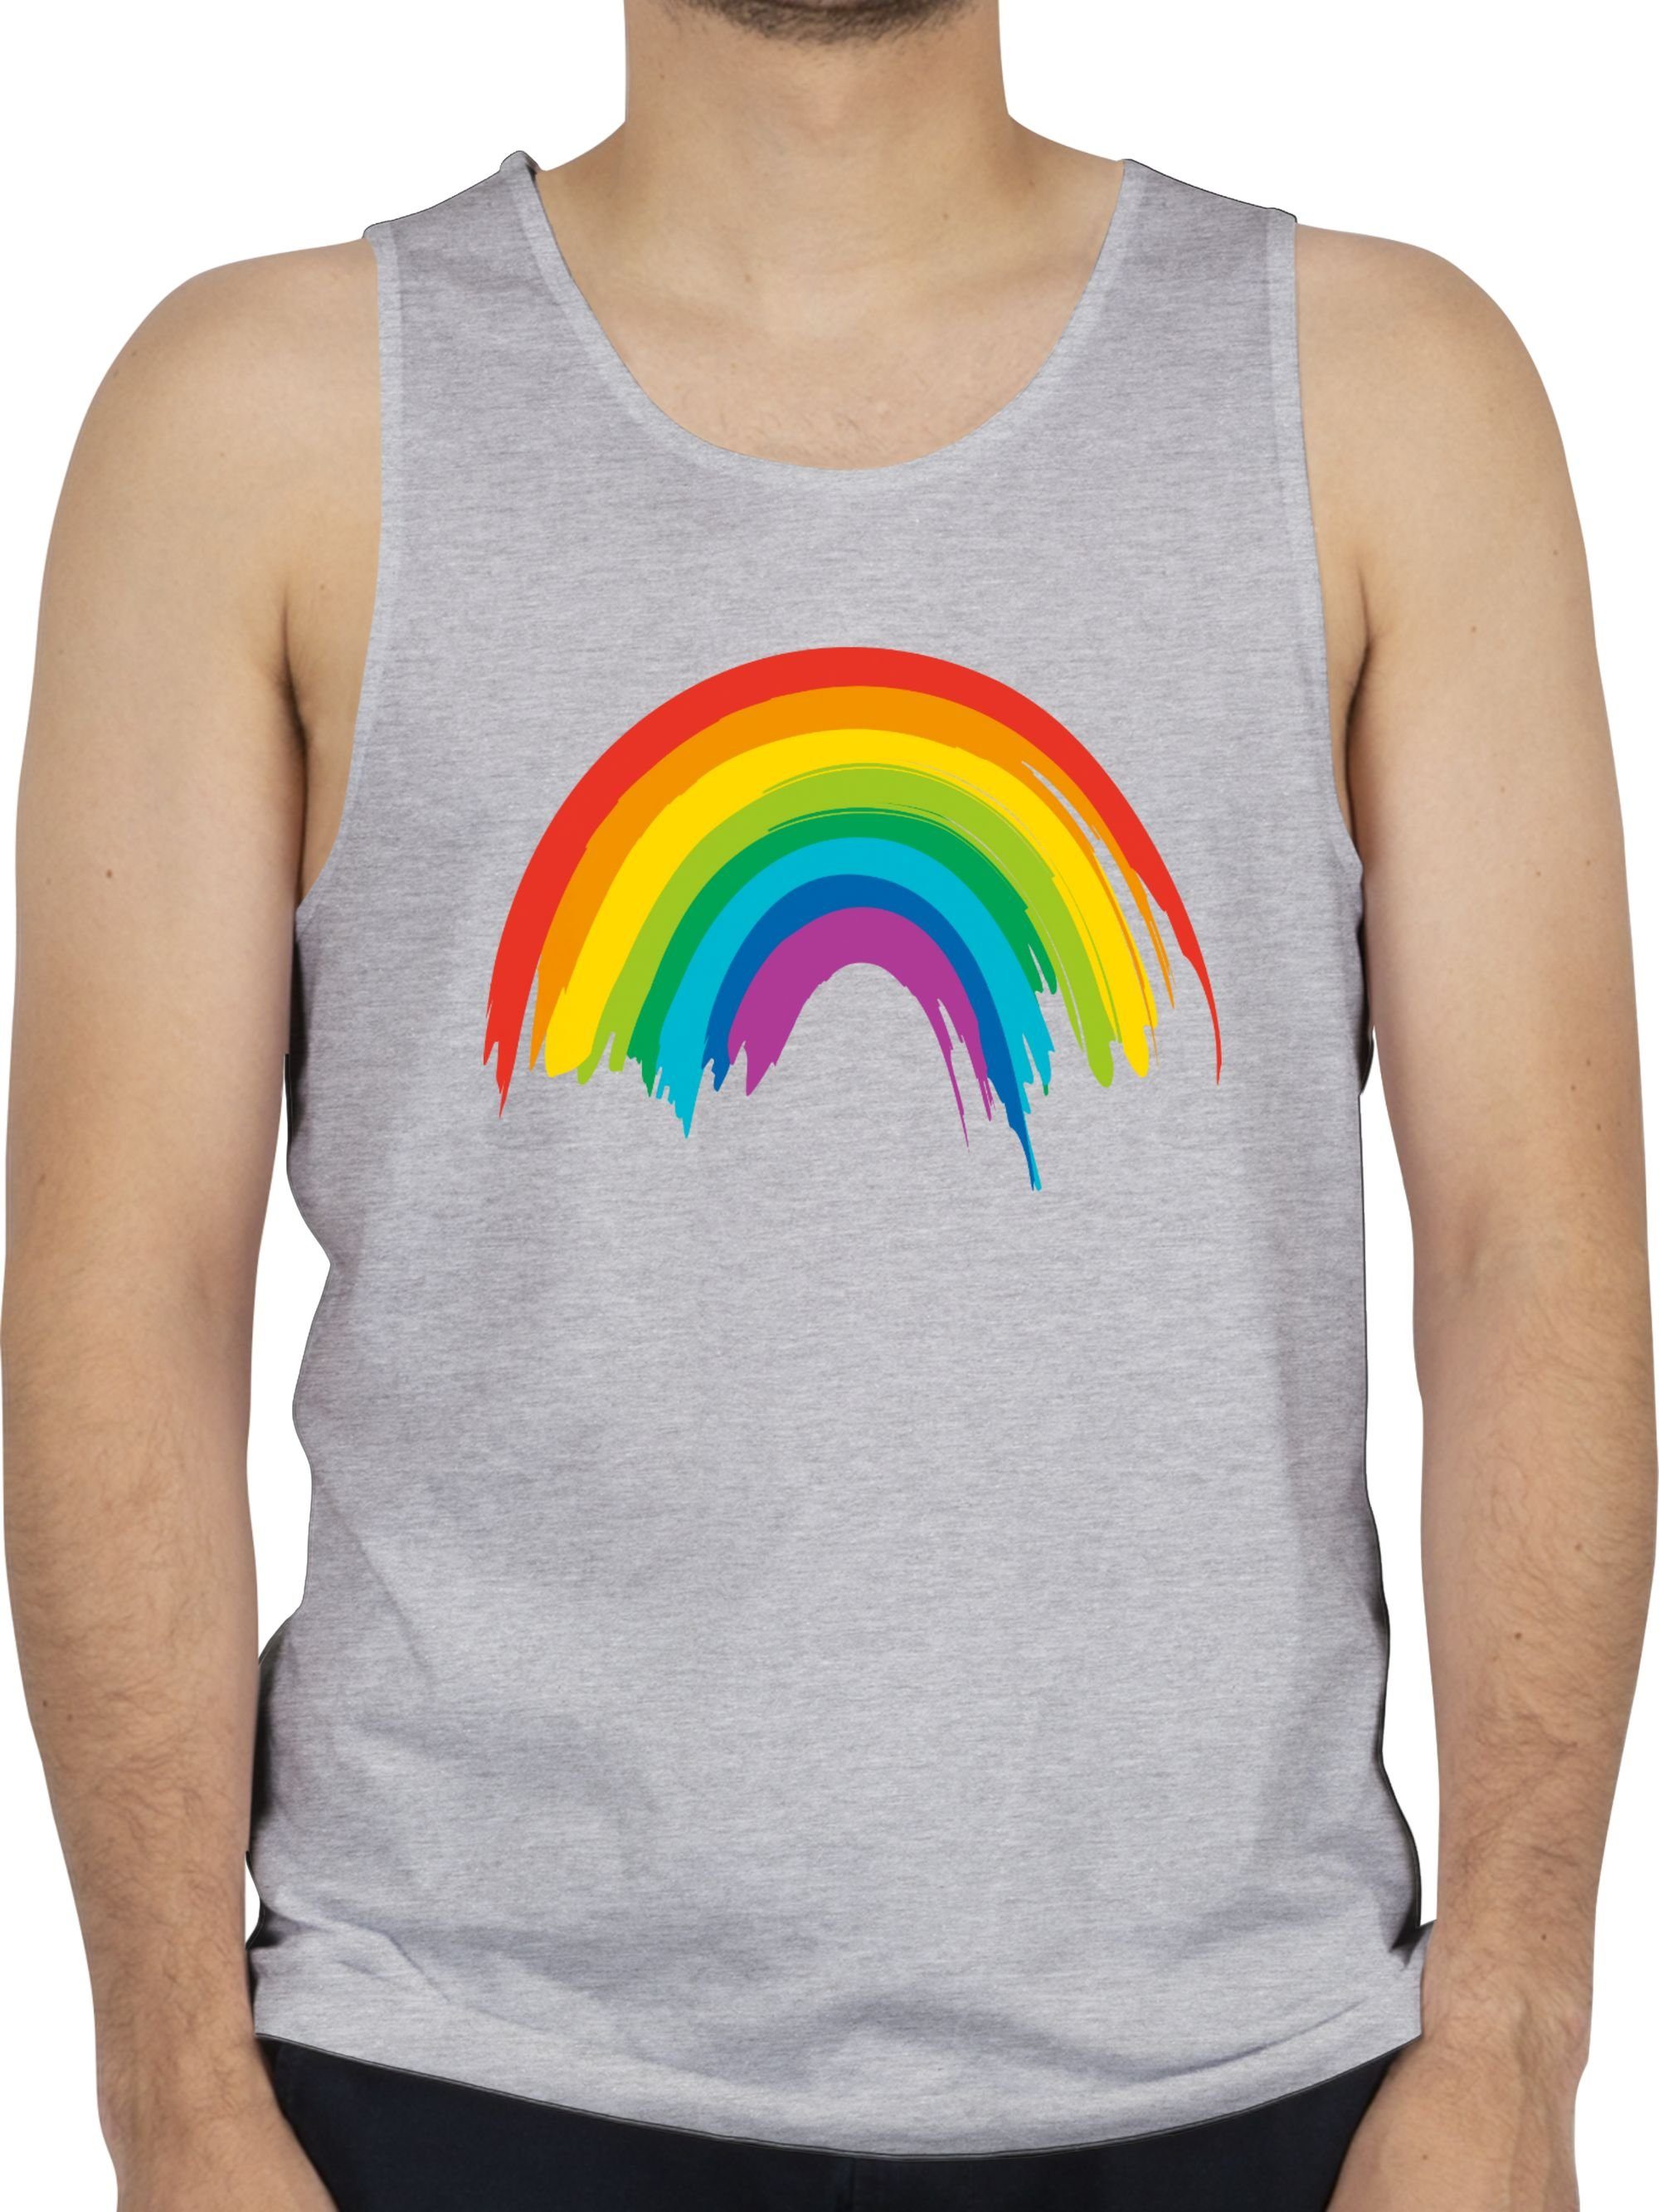 Shirtracer Tanktop »Regenbogen LGBT & LGBTQ - LGBT Kleidung - Herren Tank  Top« Pride Flagge LGBTQ online kaufen | OTTO